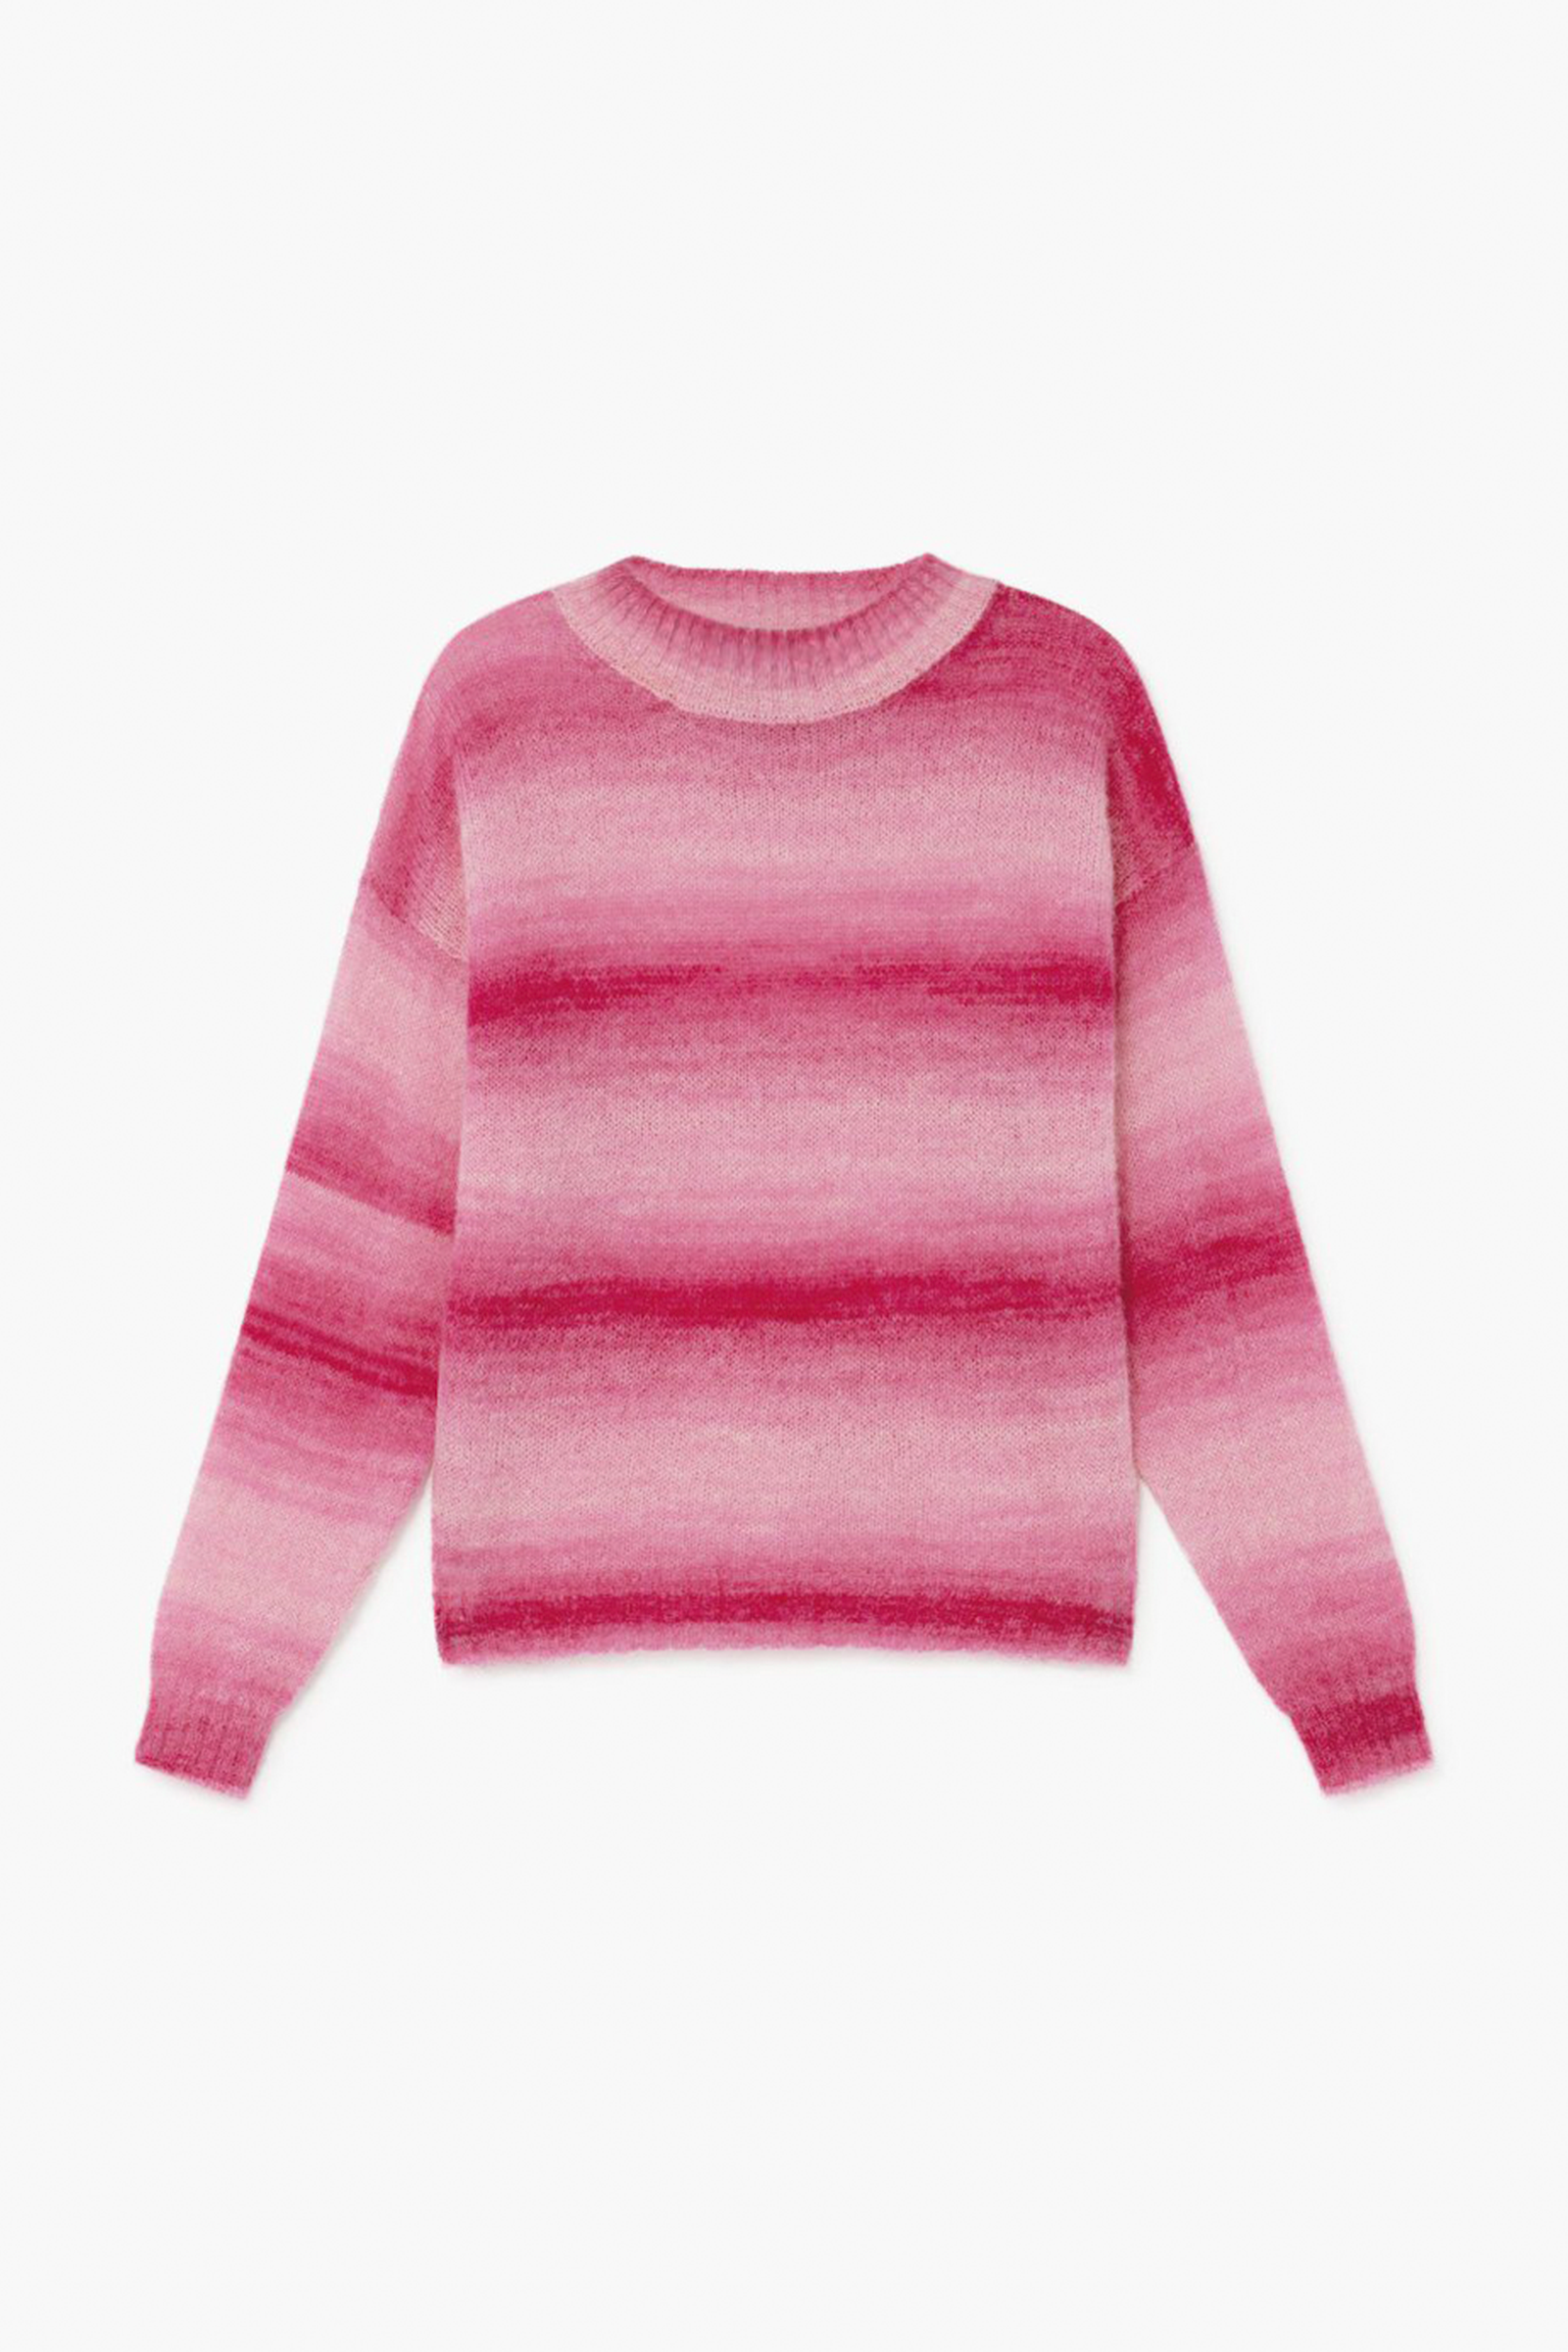 Paloma Wool Salinas Multicolor Fushia Sweater